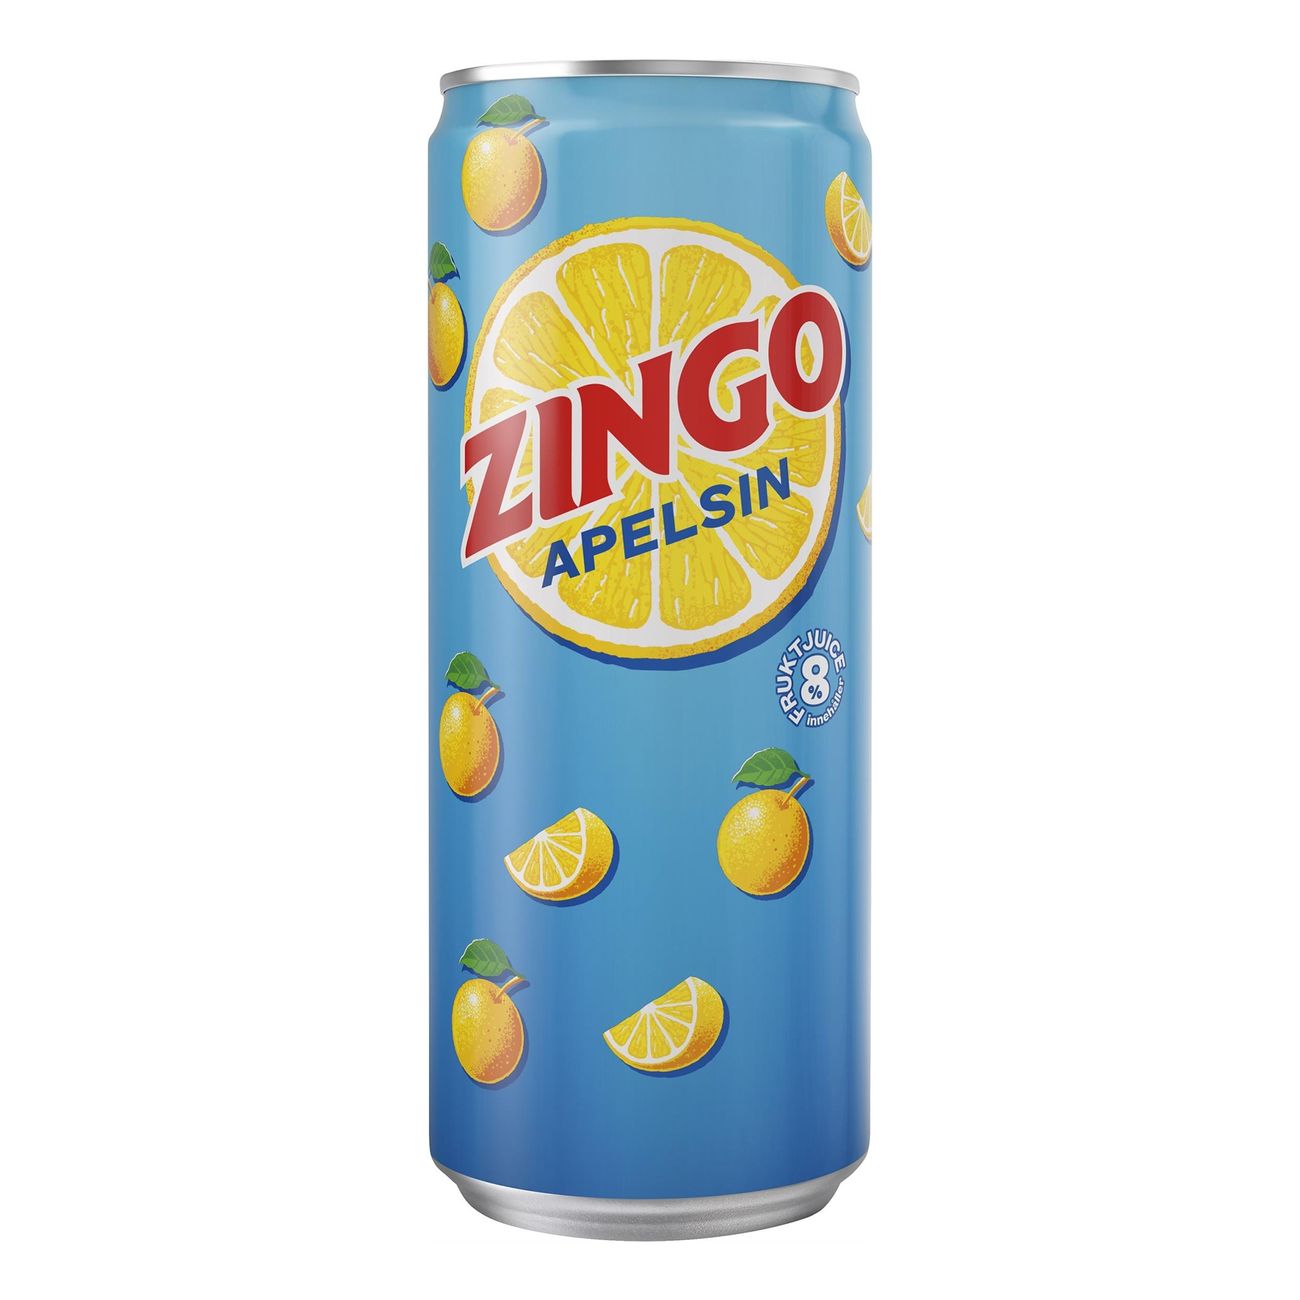 zingo-apelsin-79780-2